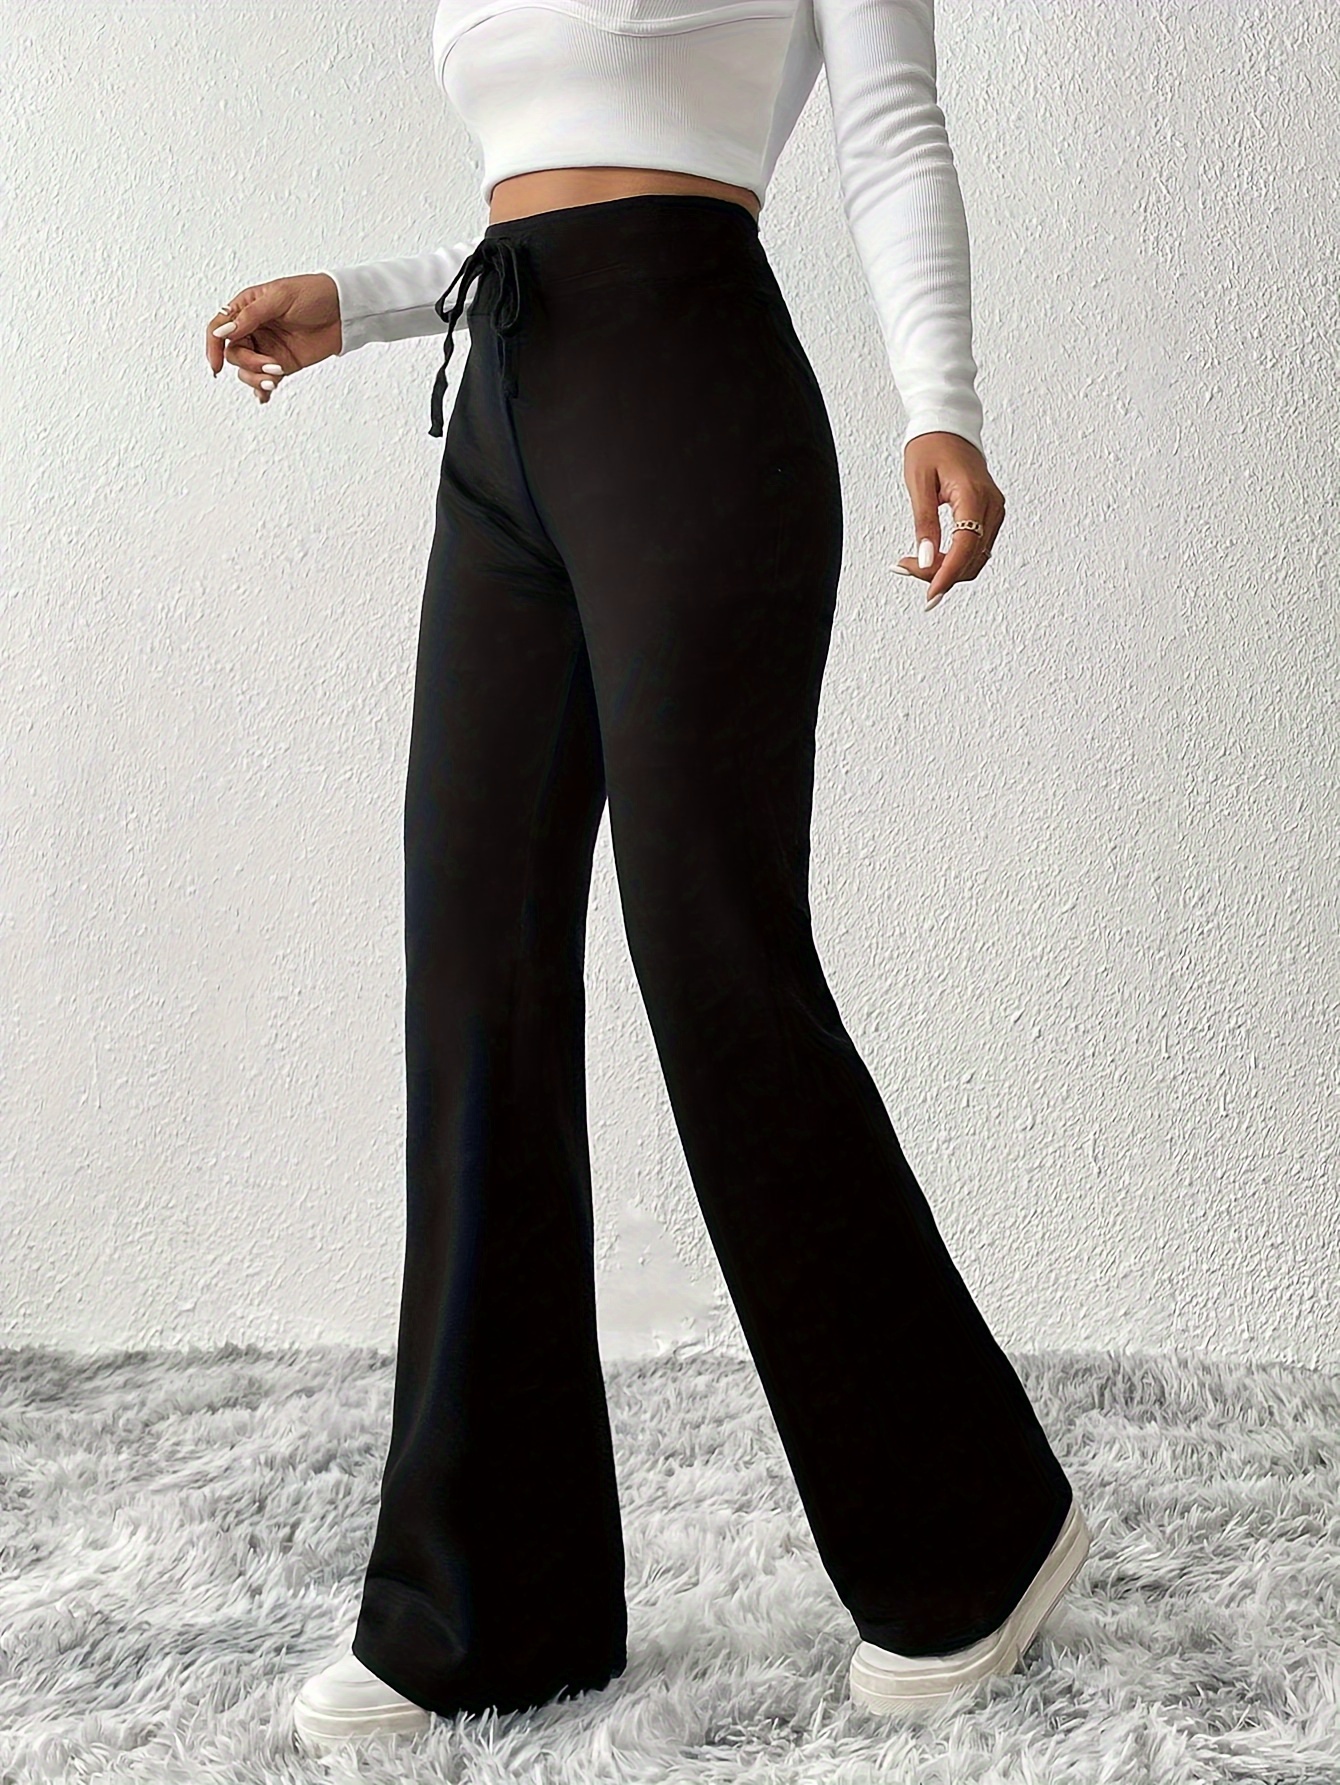 SHEIN Teen Girls' Knitted Solid Color V-Waist Elegant Flare Pants